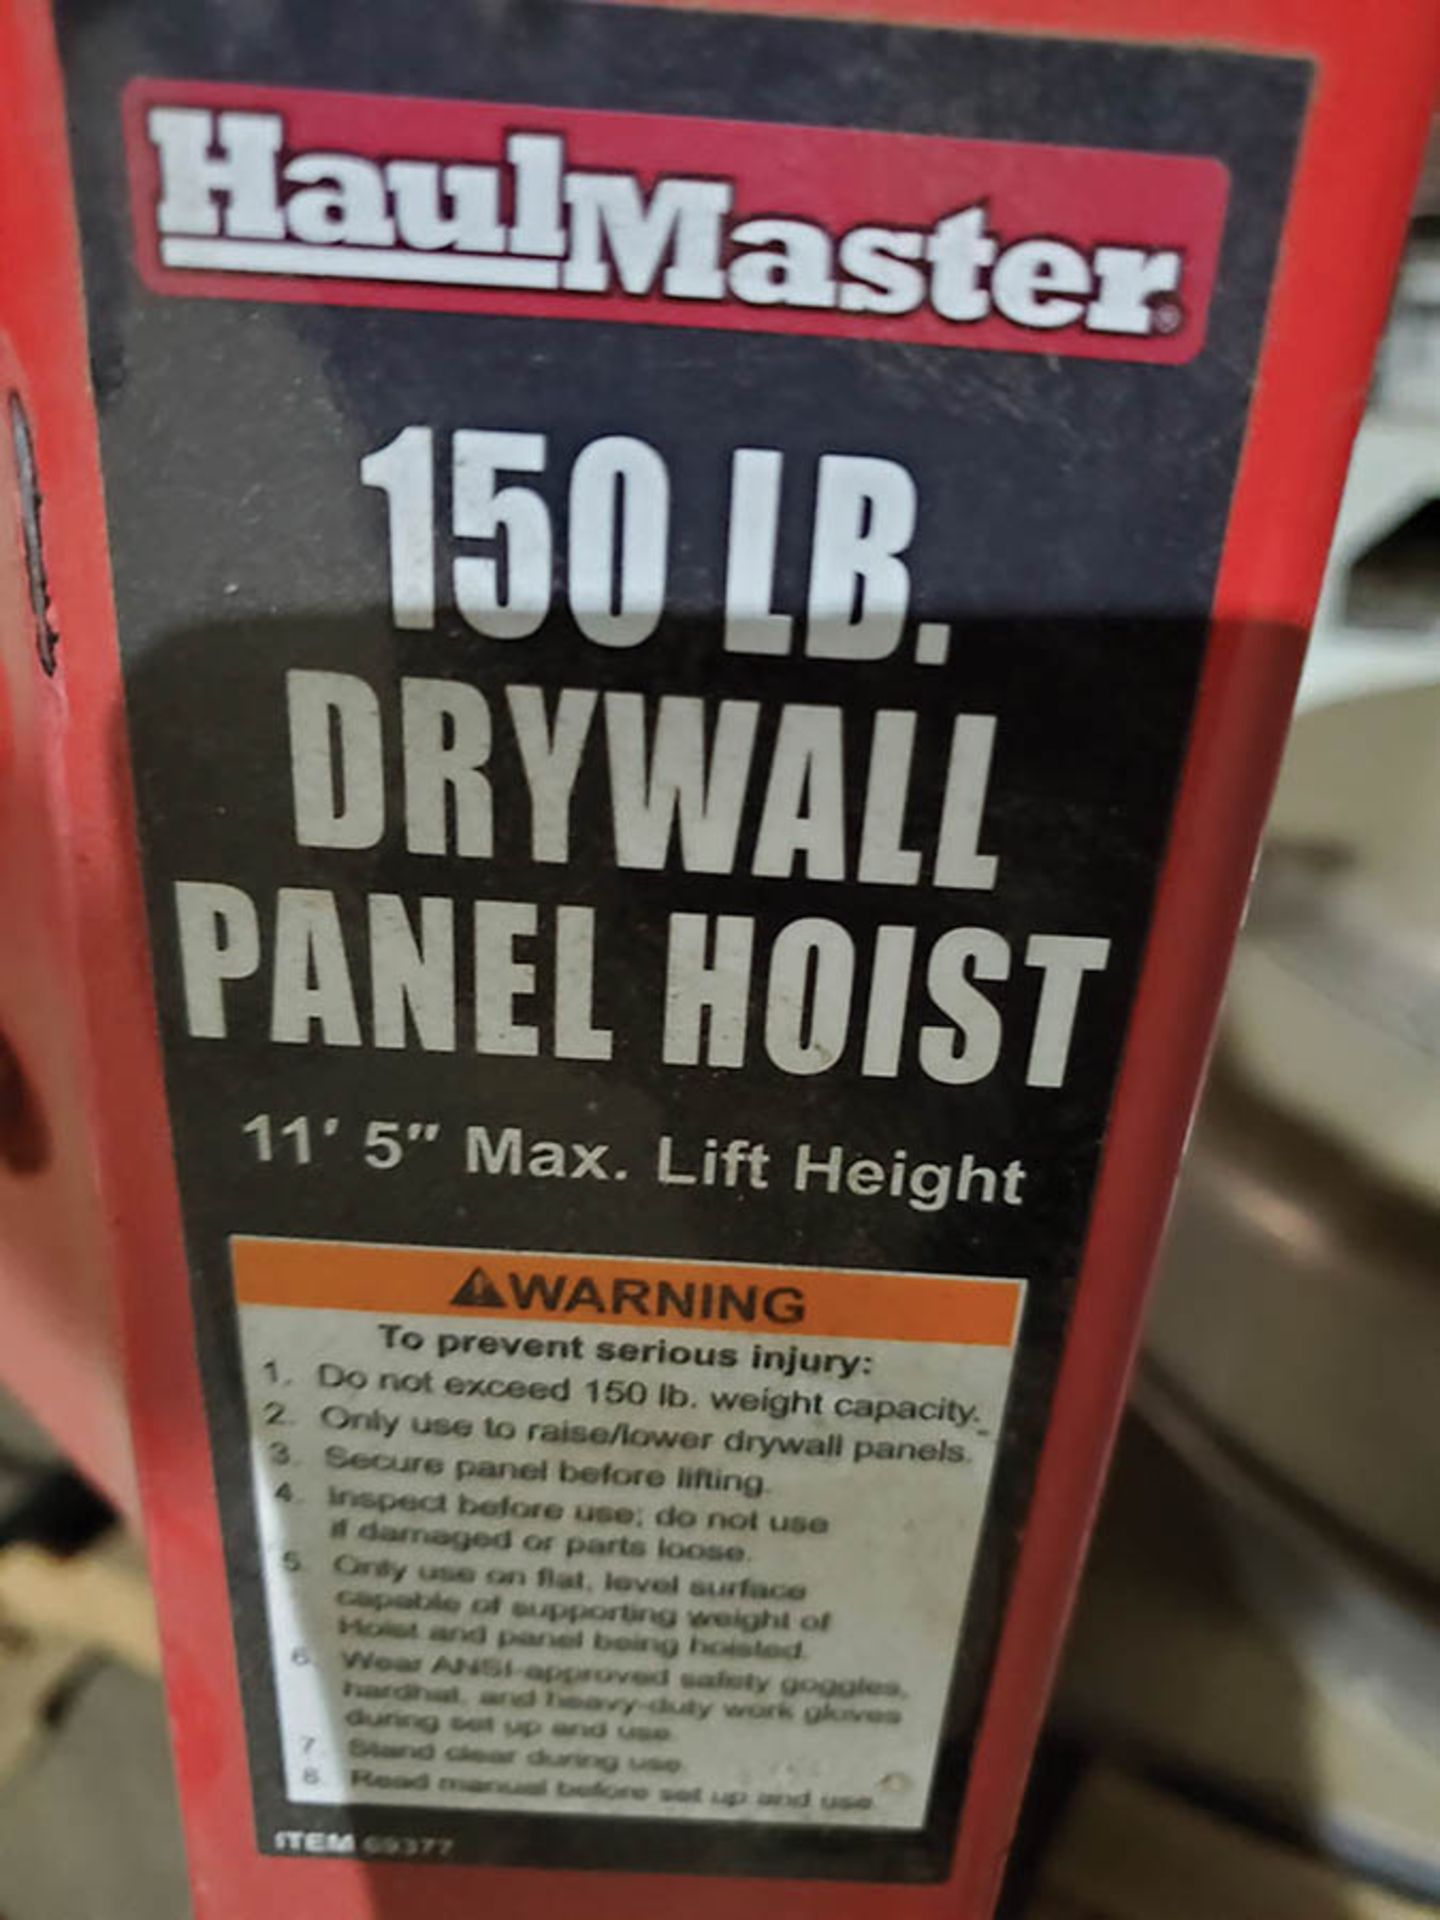 HAULMASTER 150 LB. DRYWALL PANEL HOIST, 11'5'' MAX LIFT HEIGHT - Image 2 of 3